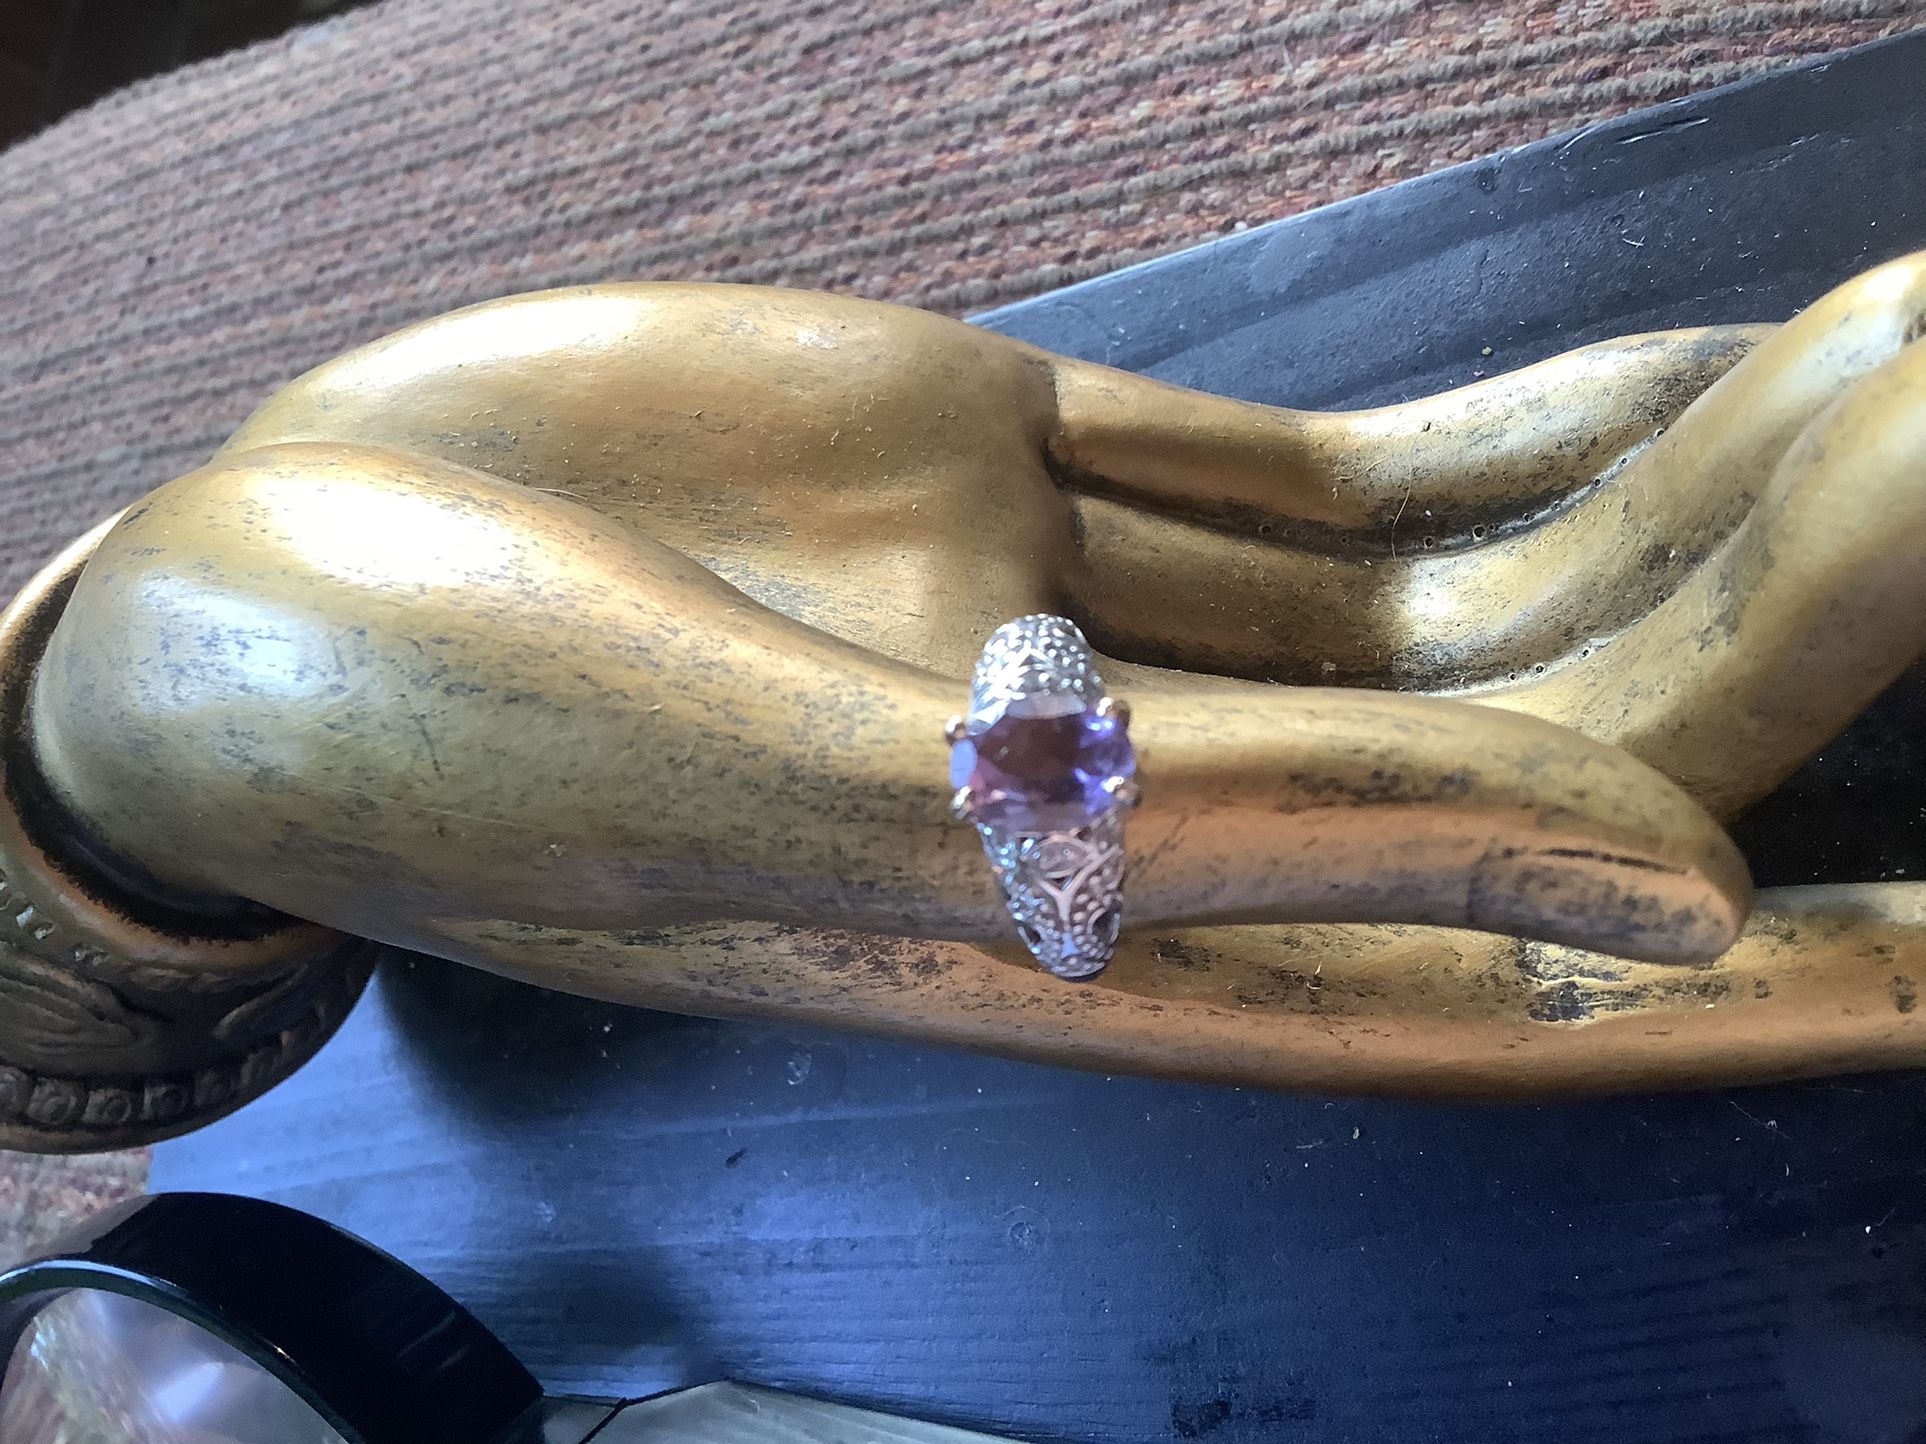 New 10k Amethyst And Diamond Ring